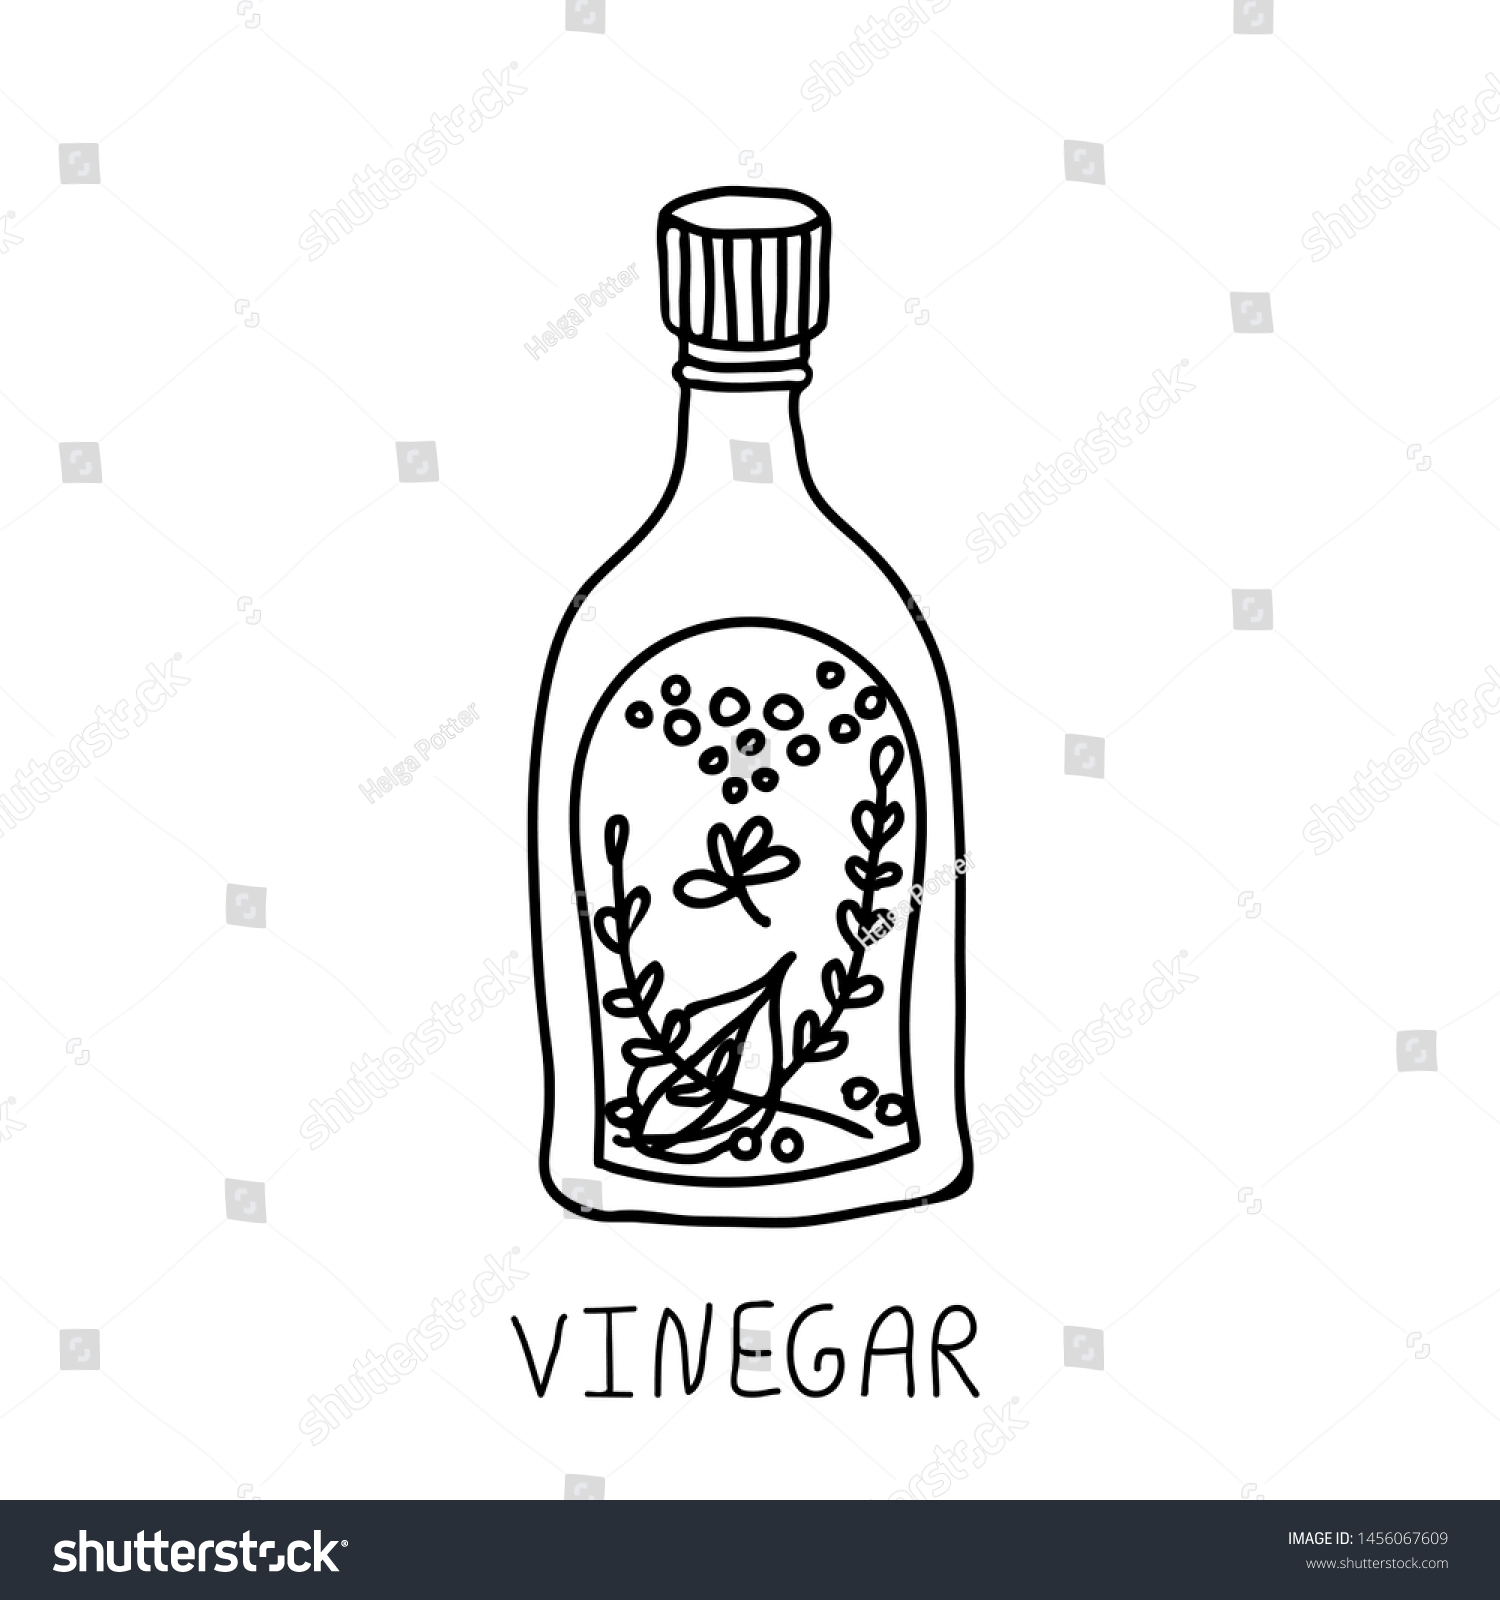 Download Glass Bottle Vinegarolive Oil Doodle Vector Stock Vector Royalty Free 1456067609 PSD Mockup Templates